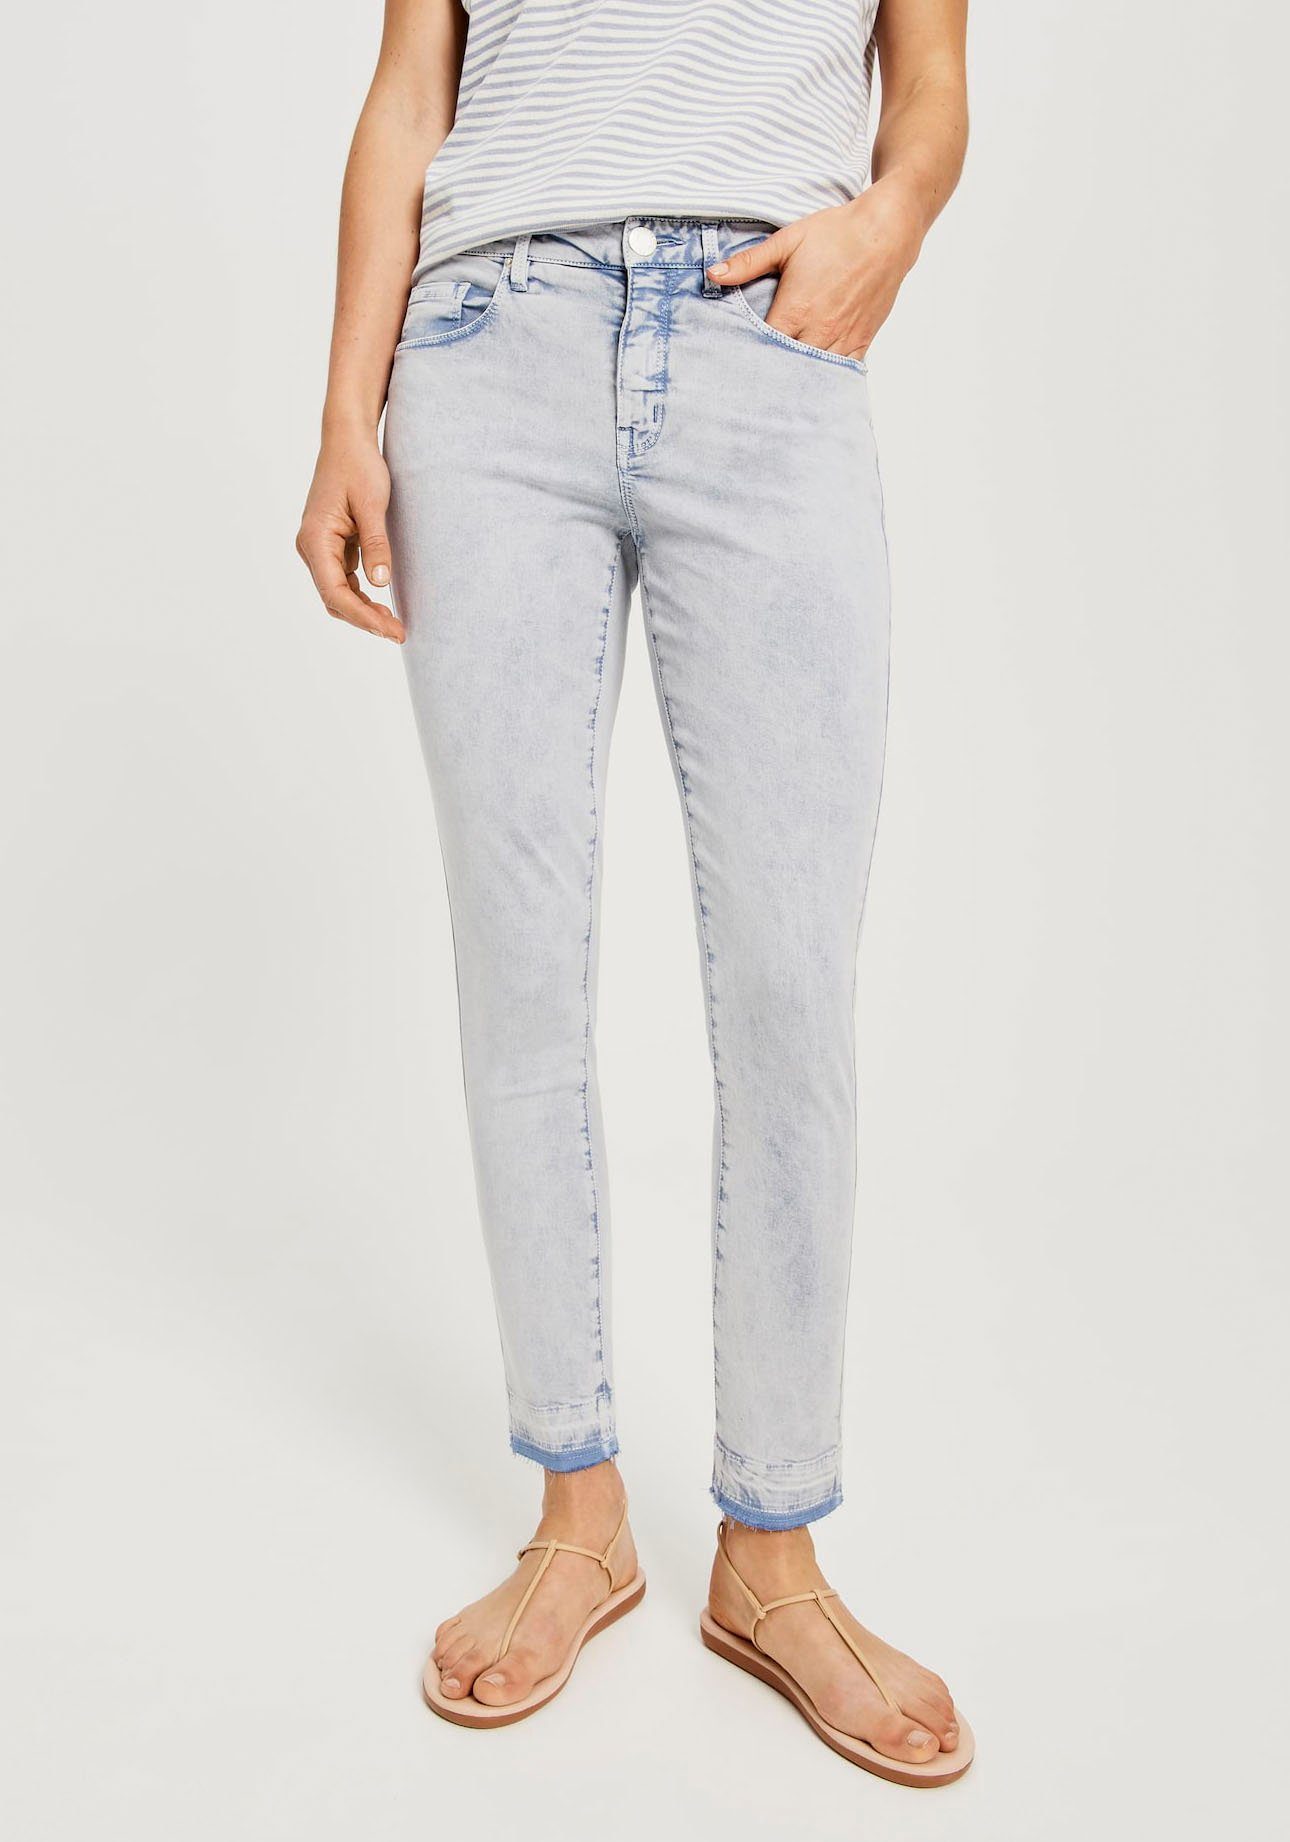 OPUS Skinny-fit-Jeans »Elma Colored« in schöner Washed-Optik online kaufen  | OTTO